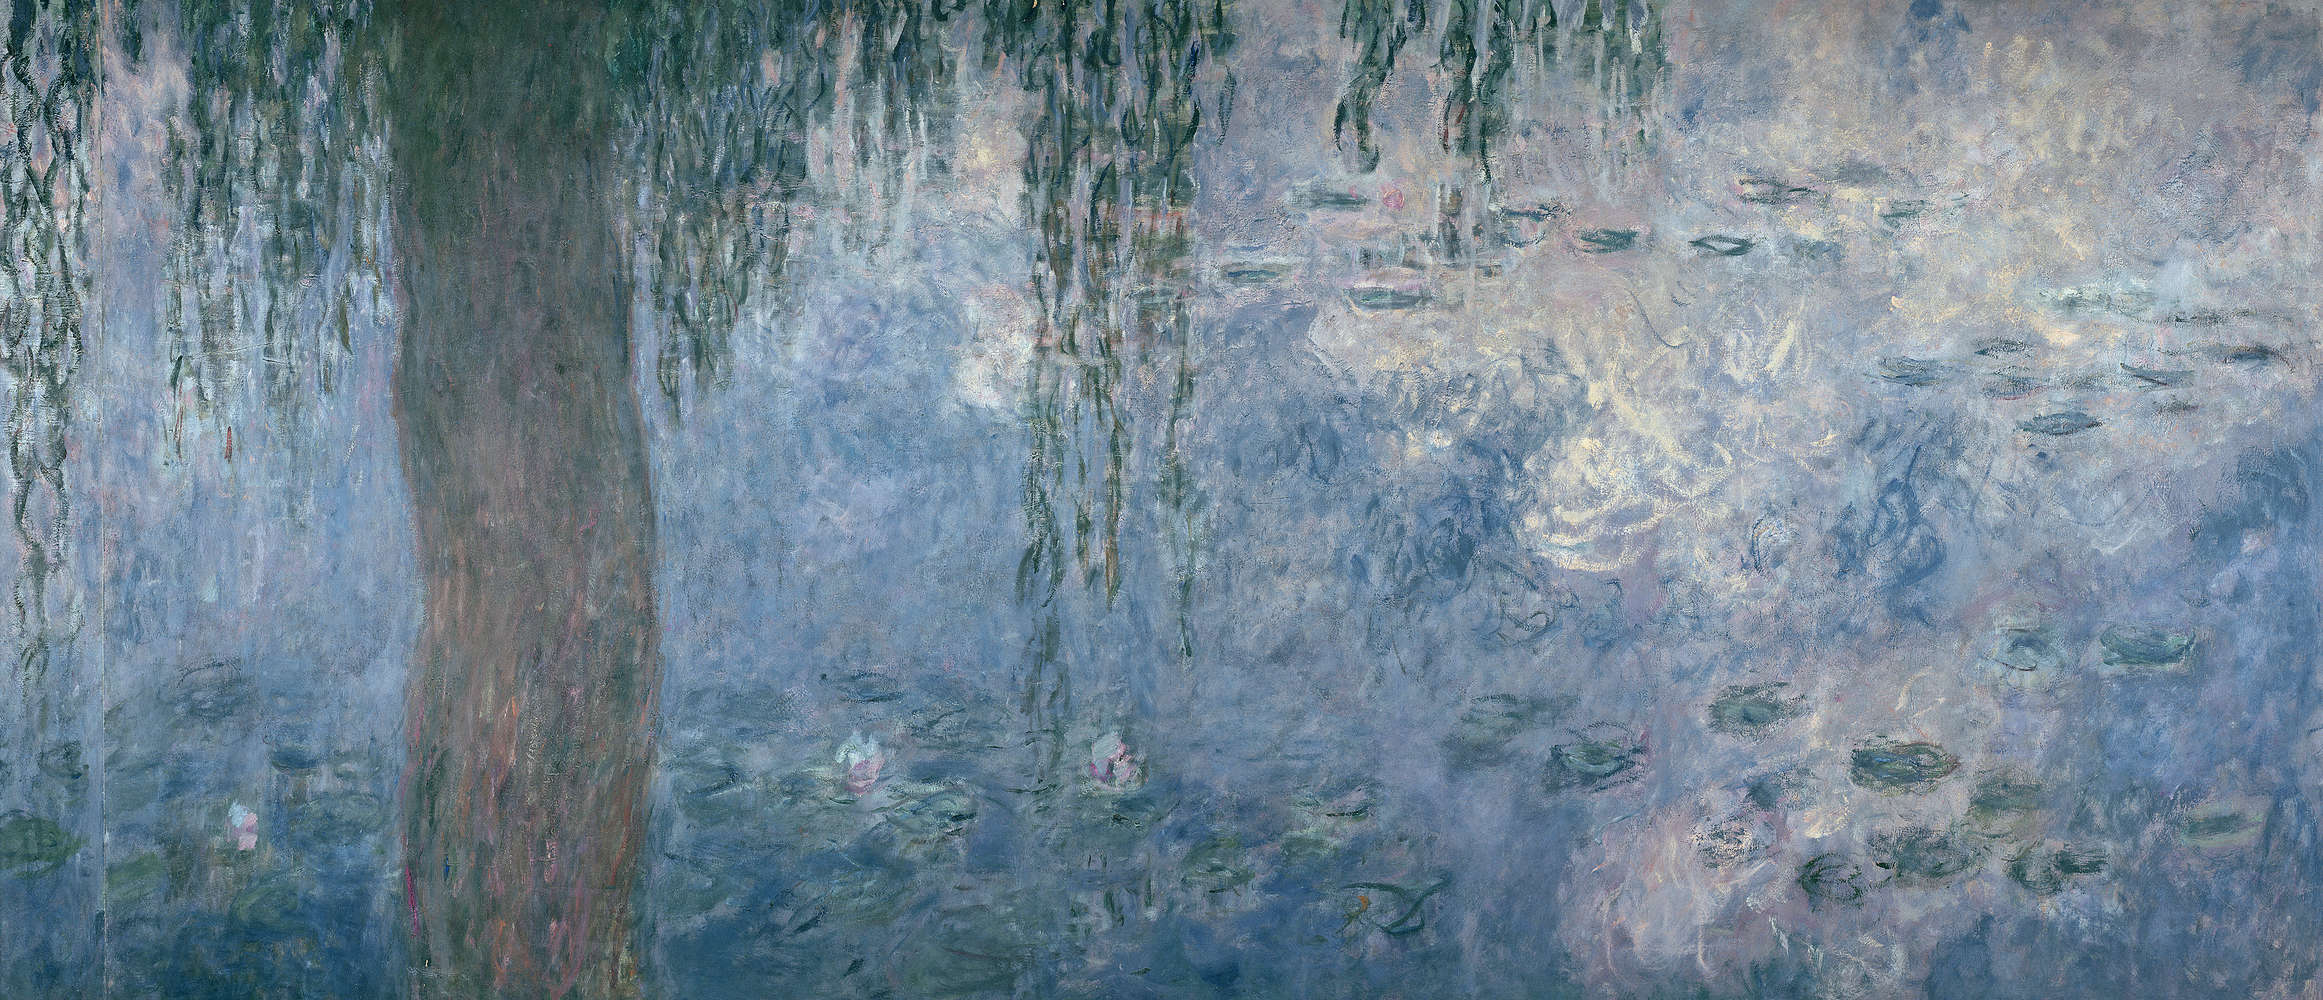             Ninfee: mattino con salici piangenti" murale di Claude Monet
        